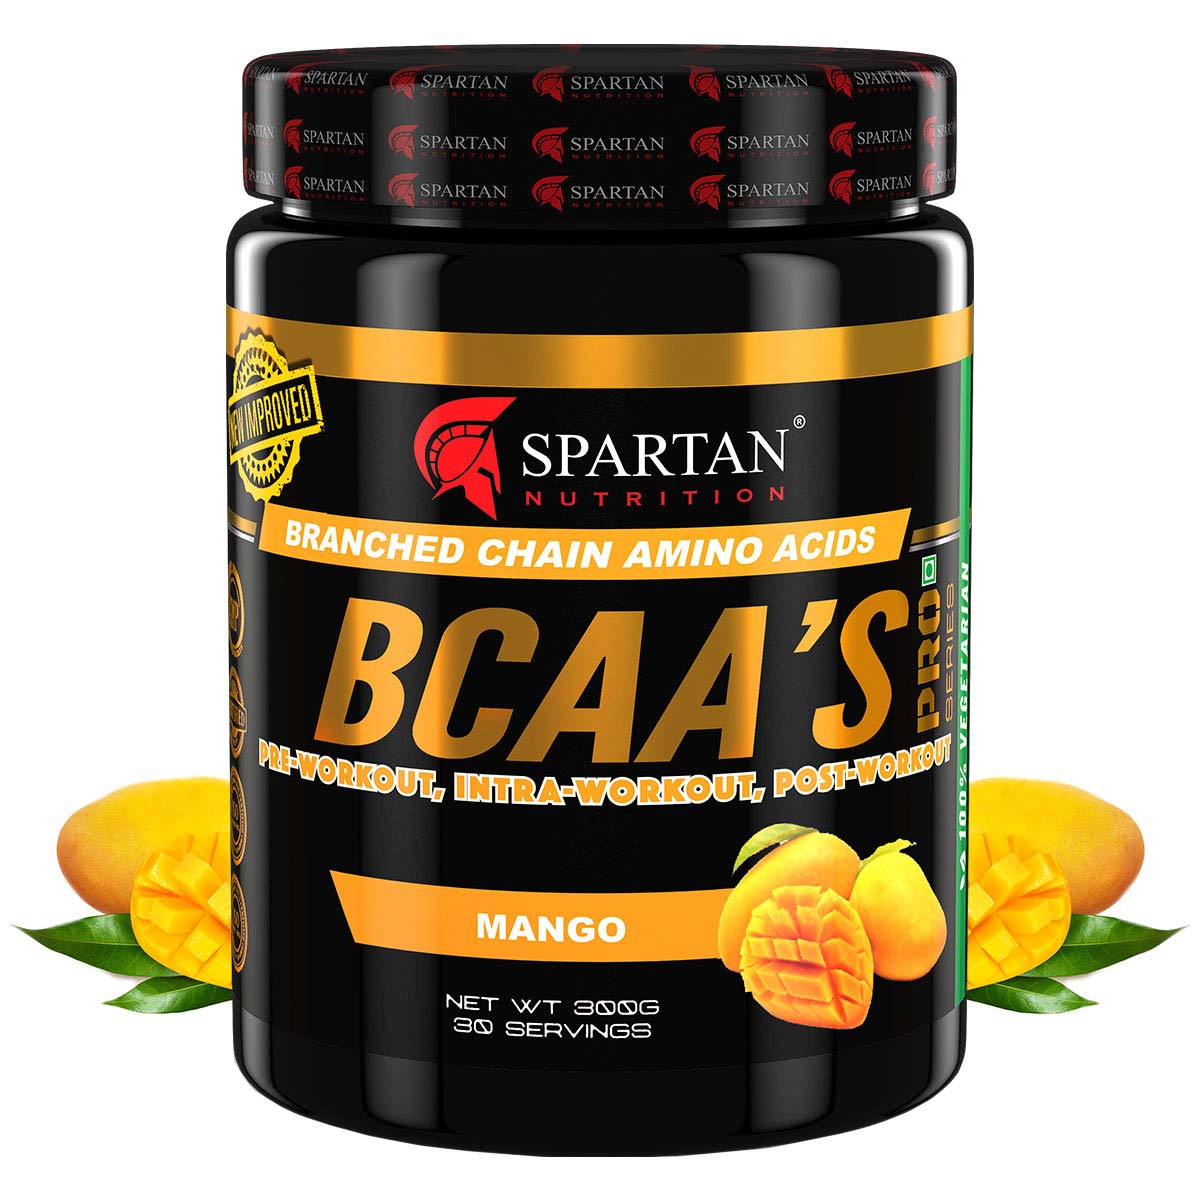 Spartan Nutrition BCAA’s Pro - 300g, with L-Leucine – 3500mg, L-Isoleucine - 1750 mg, Glutamine - 1000 mg Per Serving